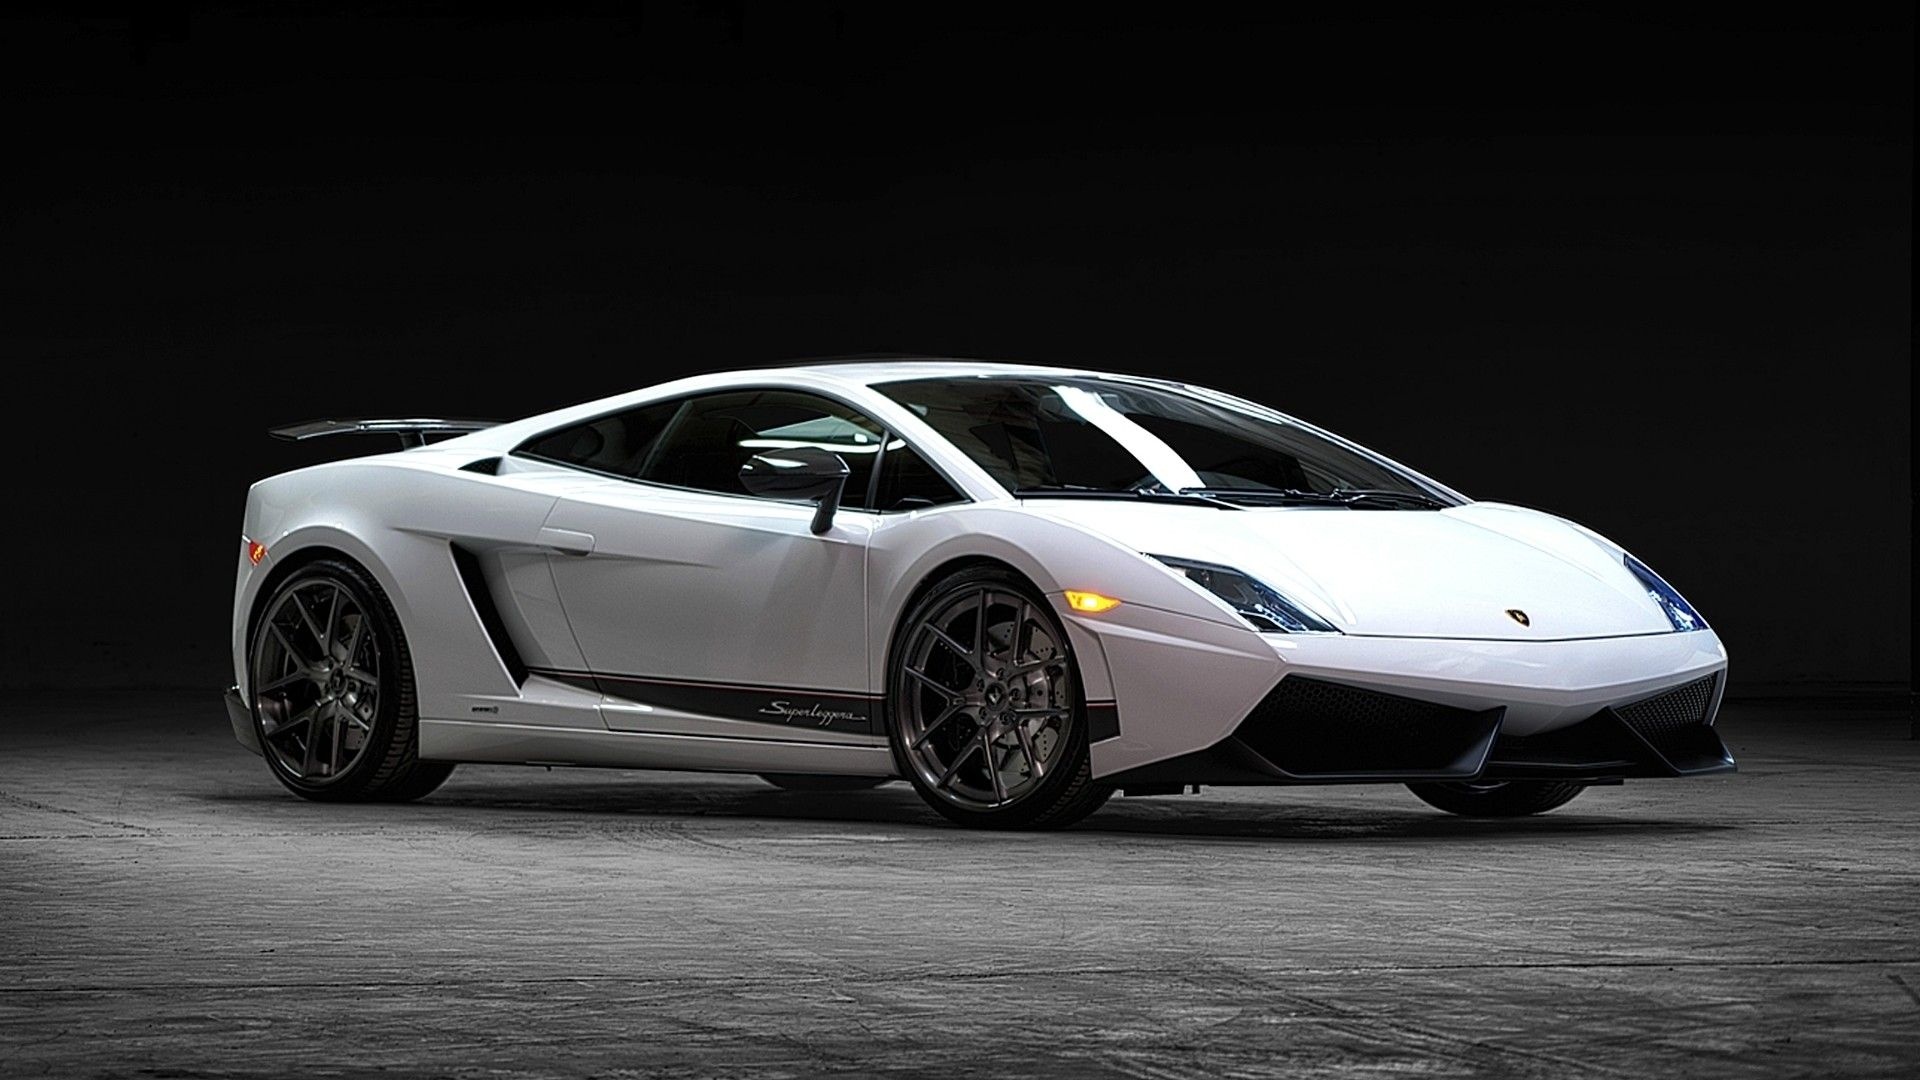 Lamborghini Gallardo, HD wallpapers, Luxury car, Backgrounds, 1920x1080 Full HD Desktop